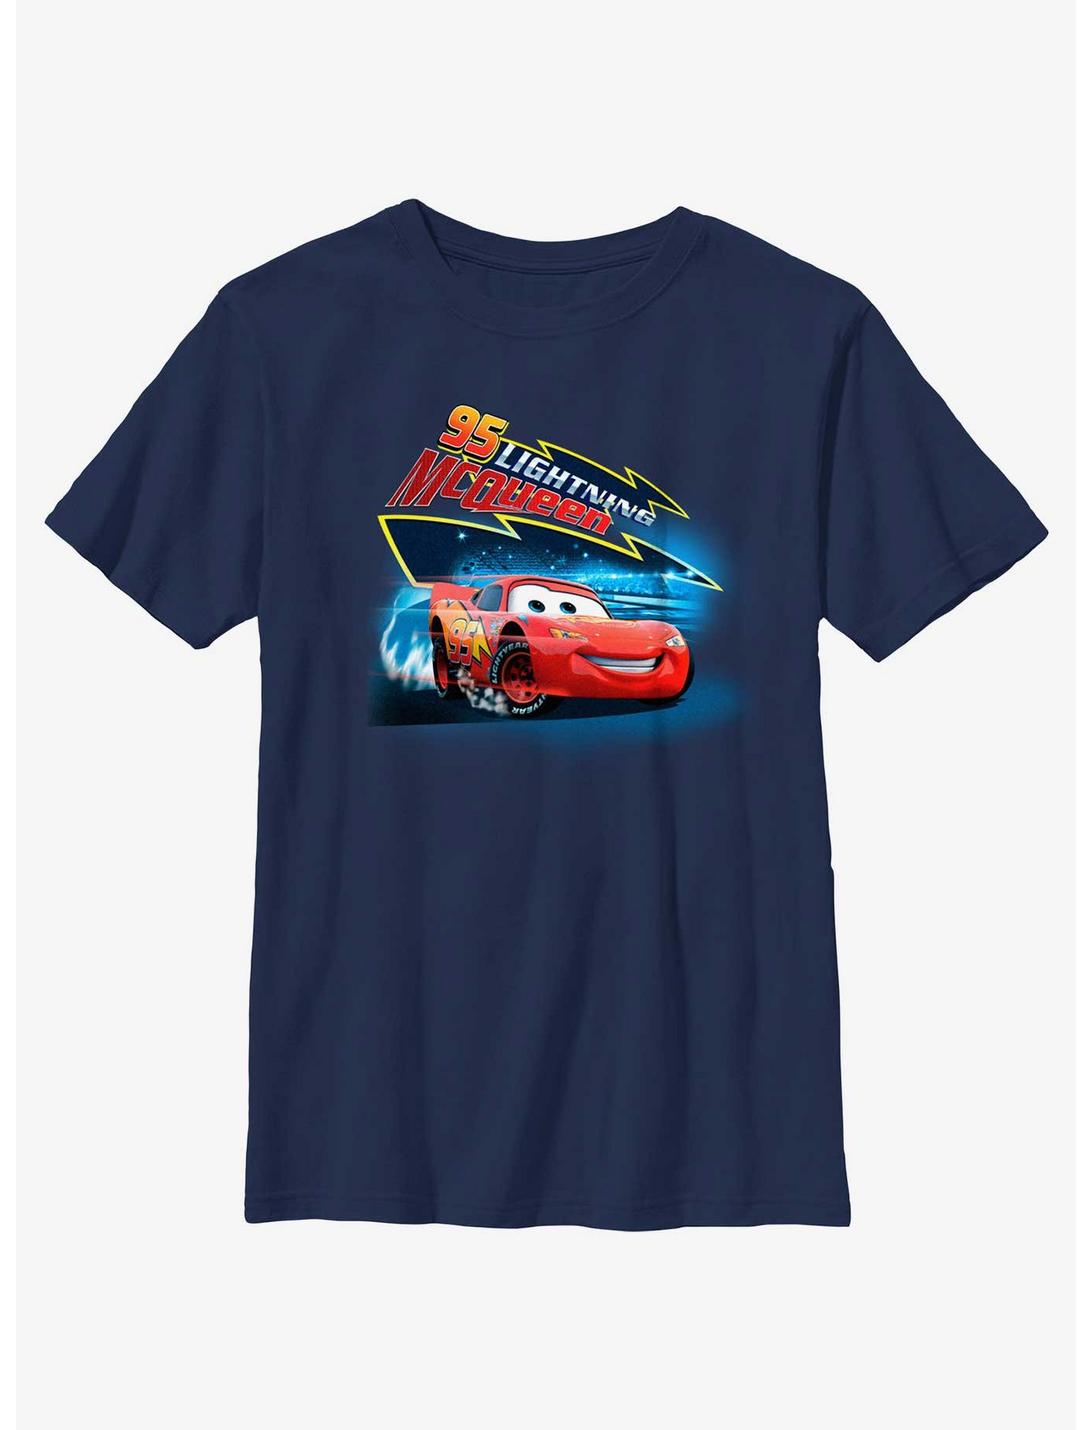 Disney Pixar Cars Blue Lightning Youth T-Shirt, NAVY, hi-res